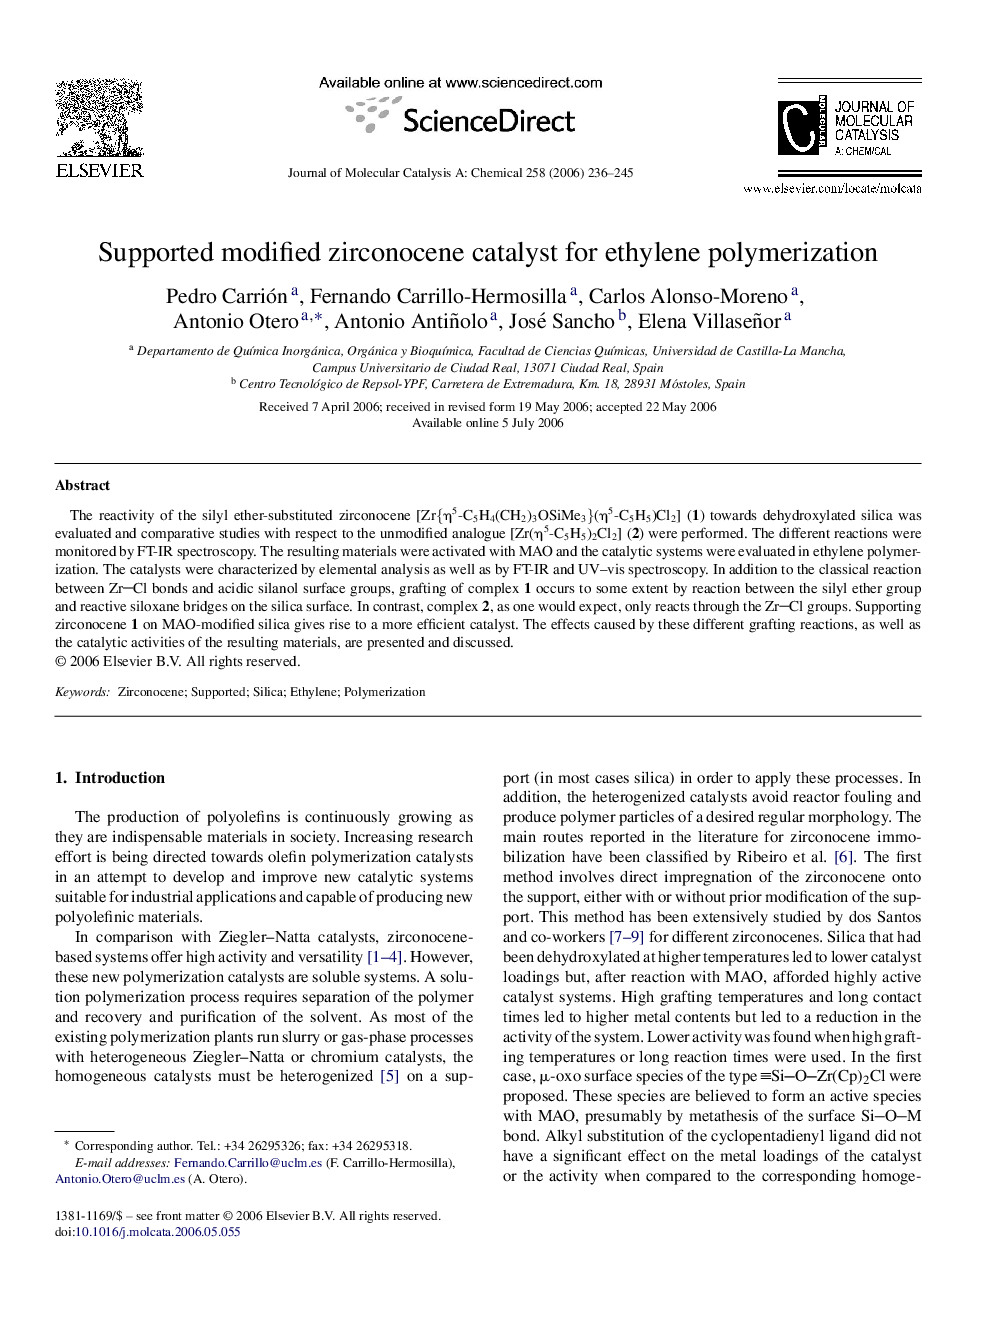 Supported modified zirconocene catalyst for ethylene polymerization